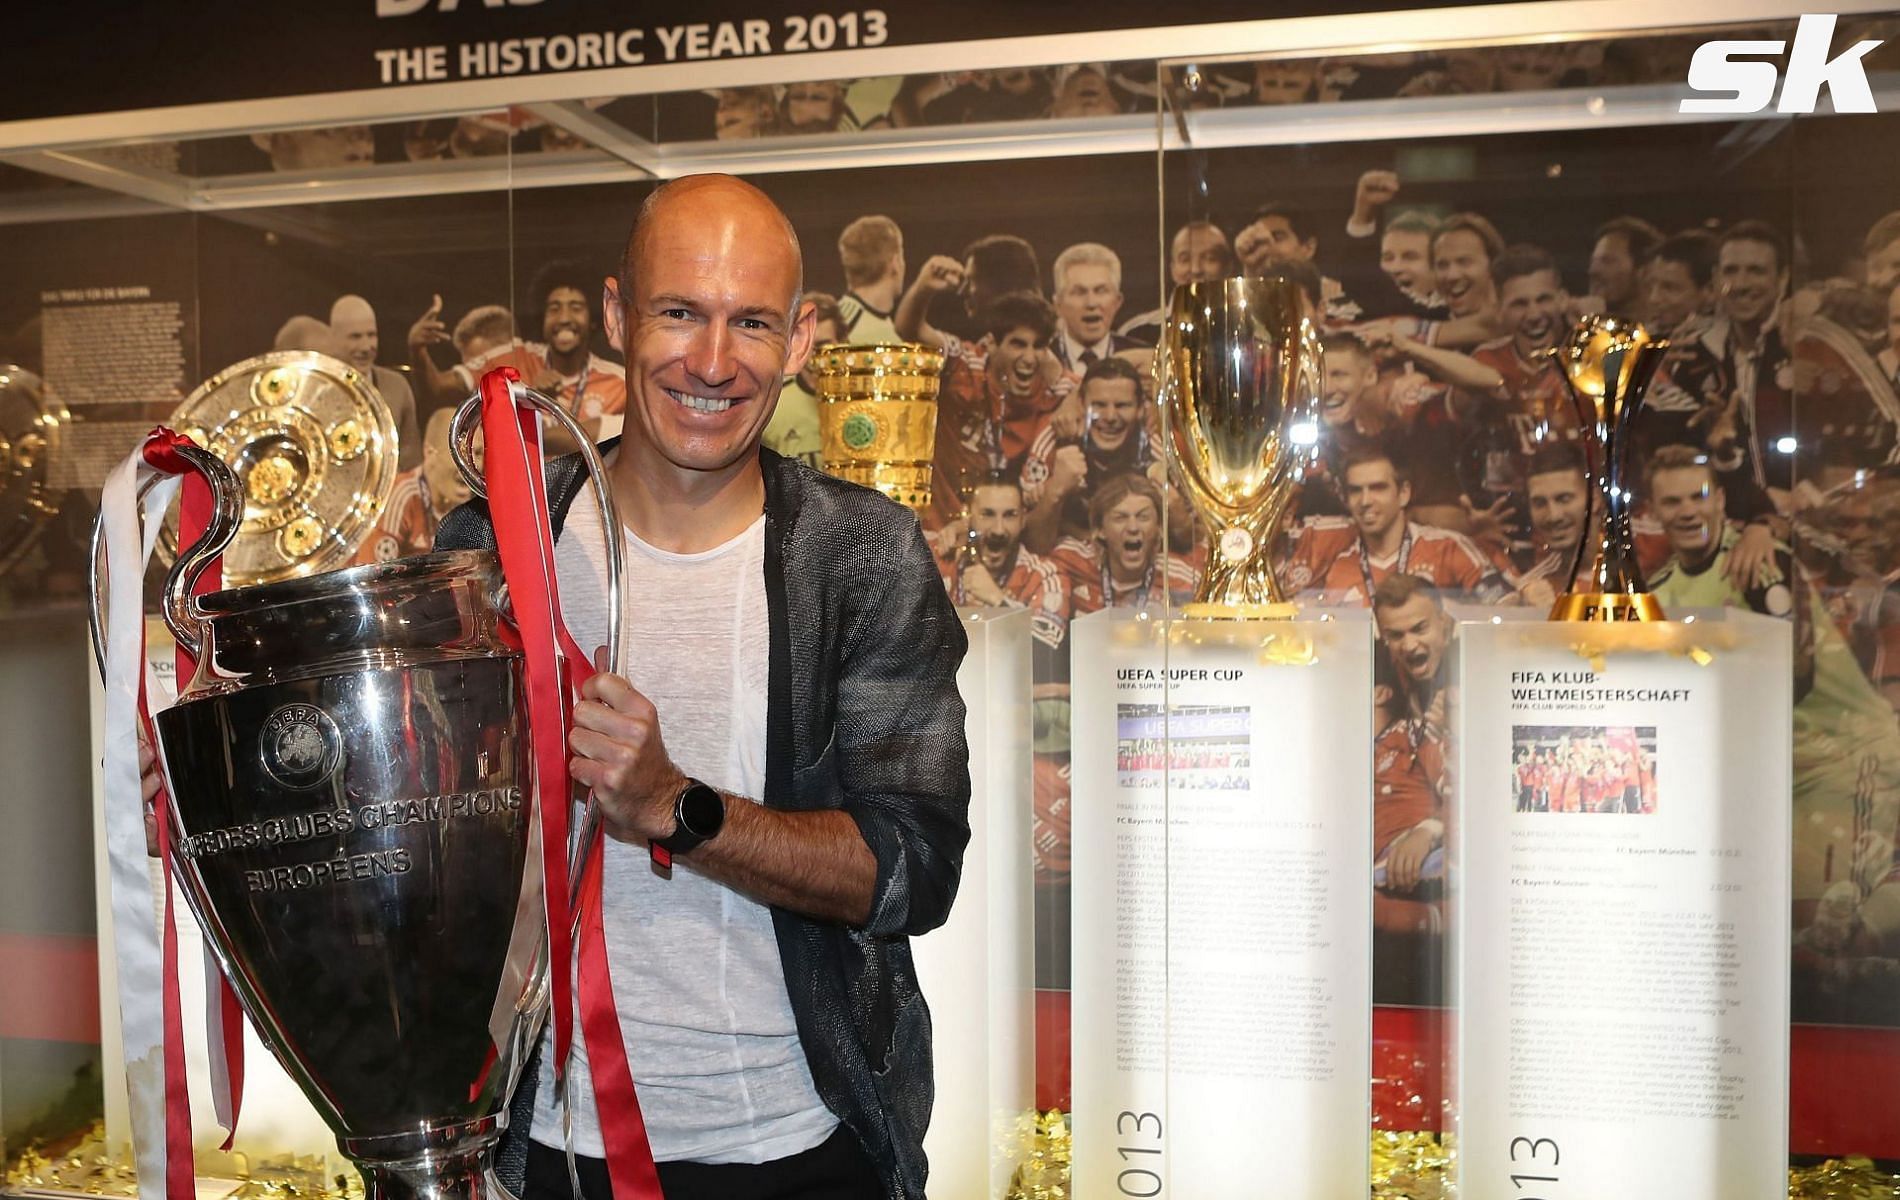 Former Premier League superstar Arjen Robben won the 2012-13 Treble with Bayern Munich